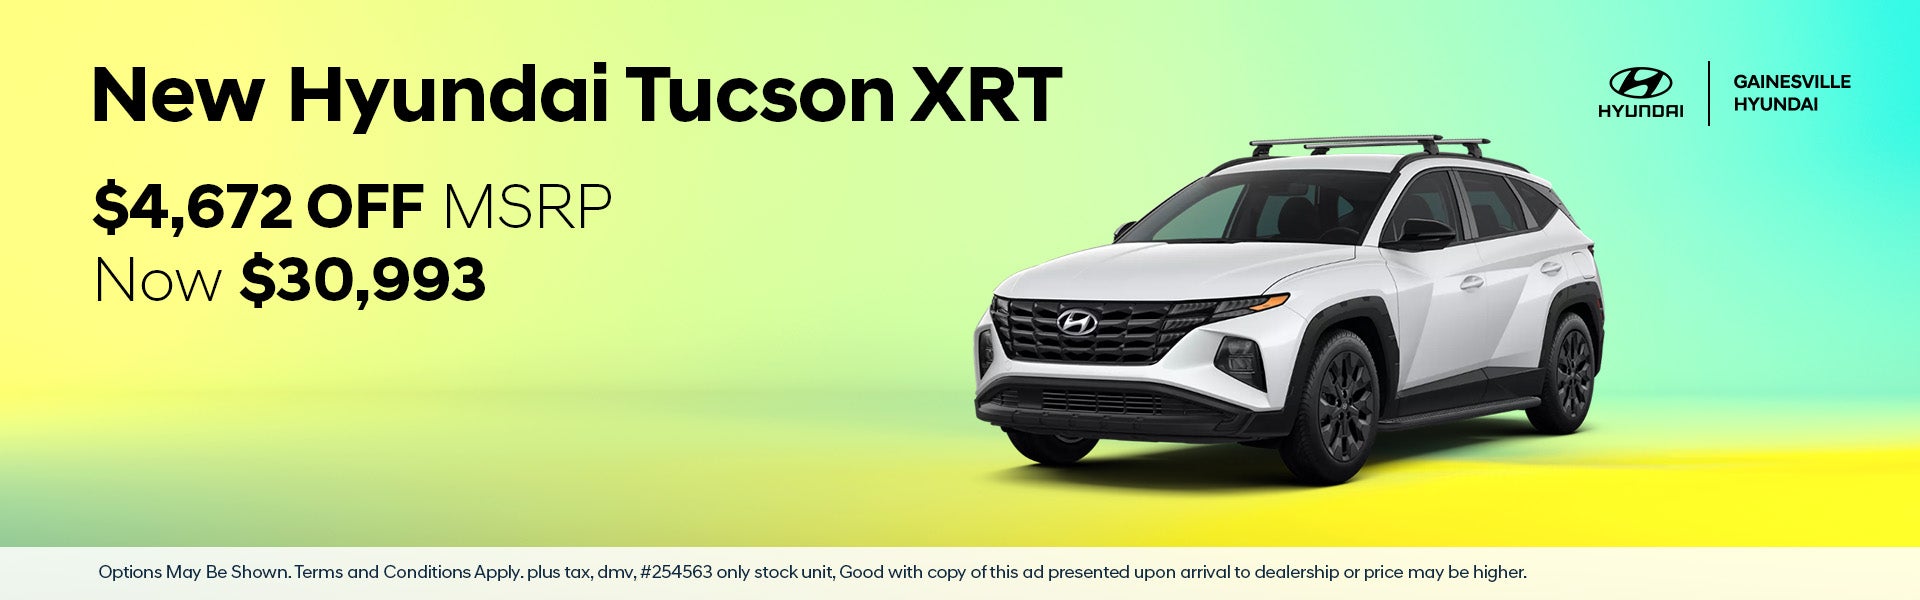 New Hyundai Tucson XRT $4672 off MSRP